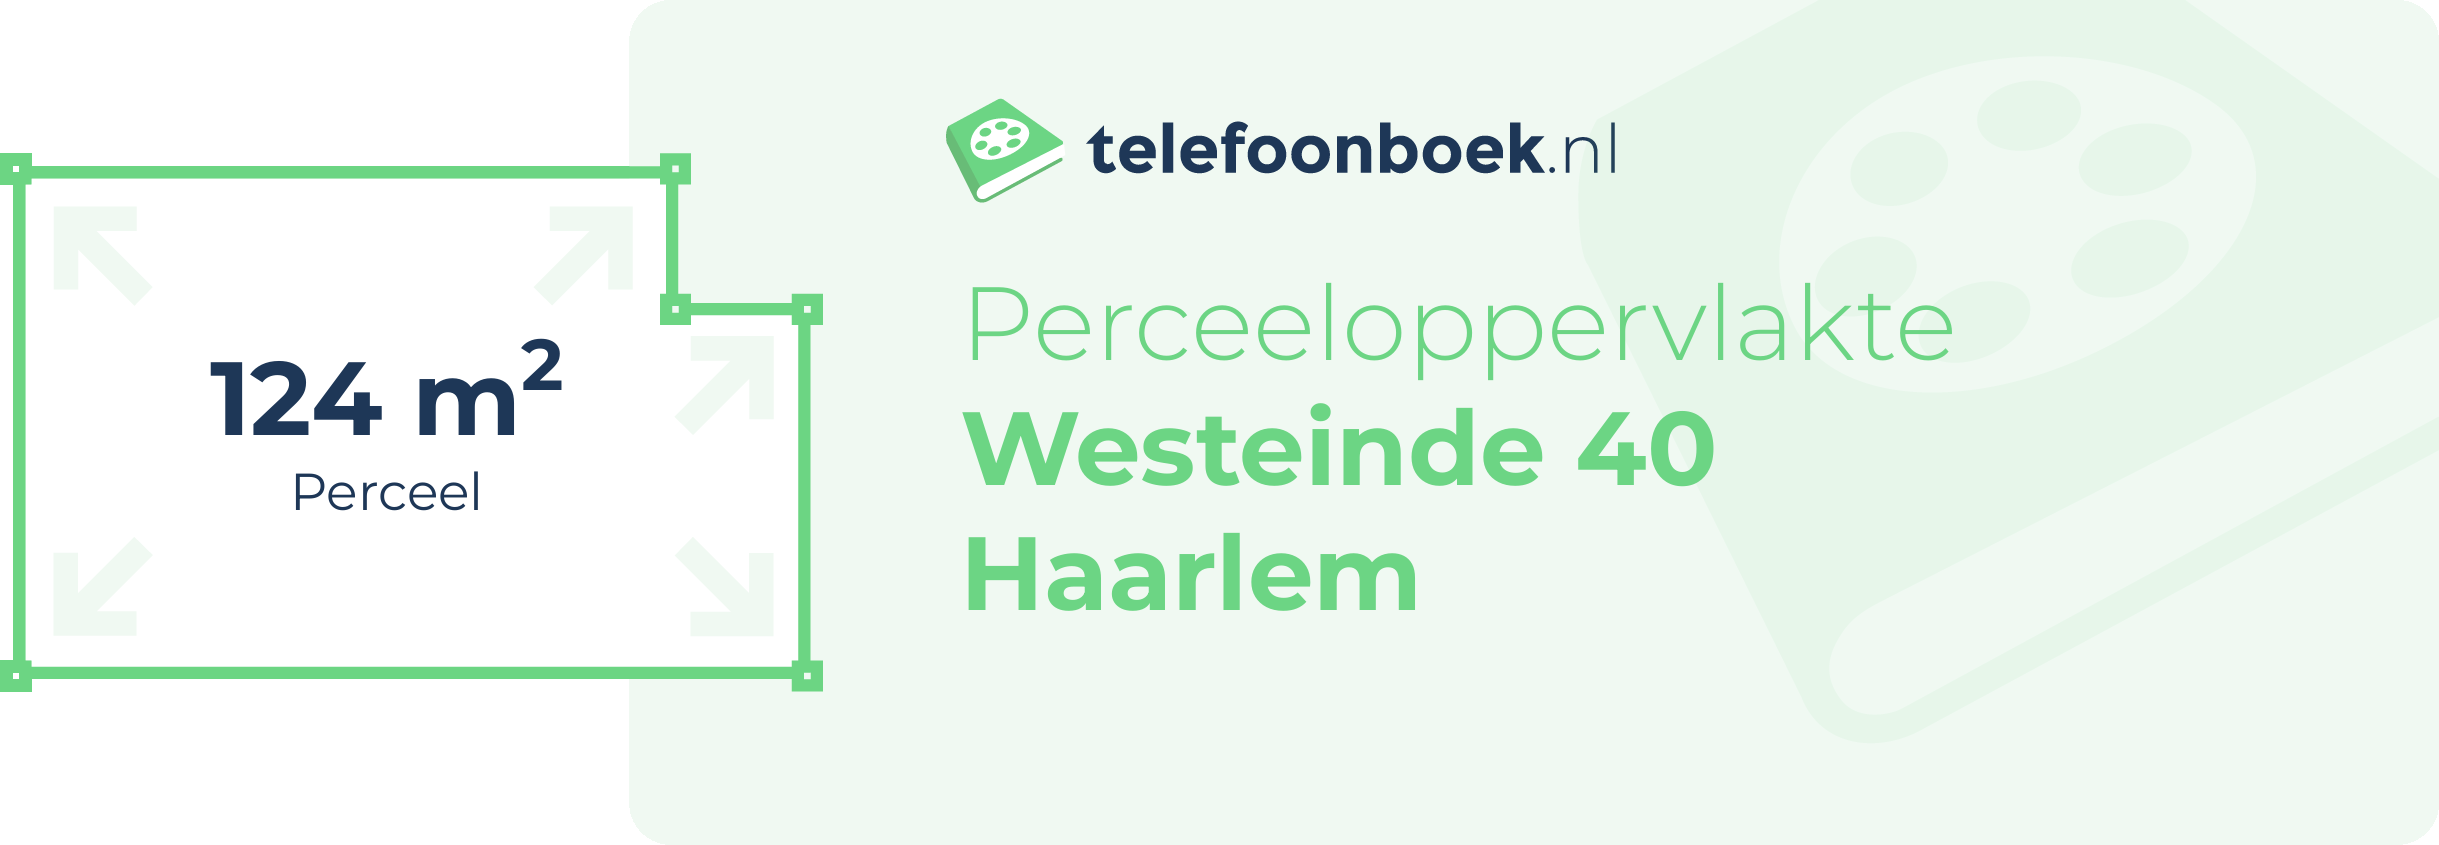 Perceeloppervlakte Westeinde 40 Haarlem